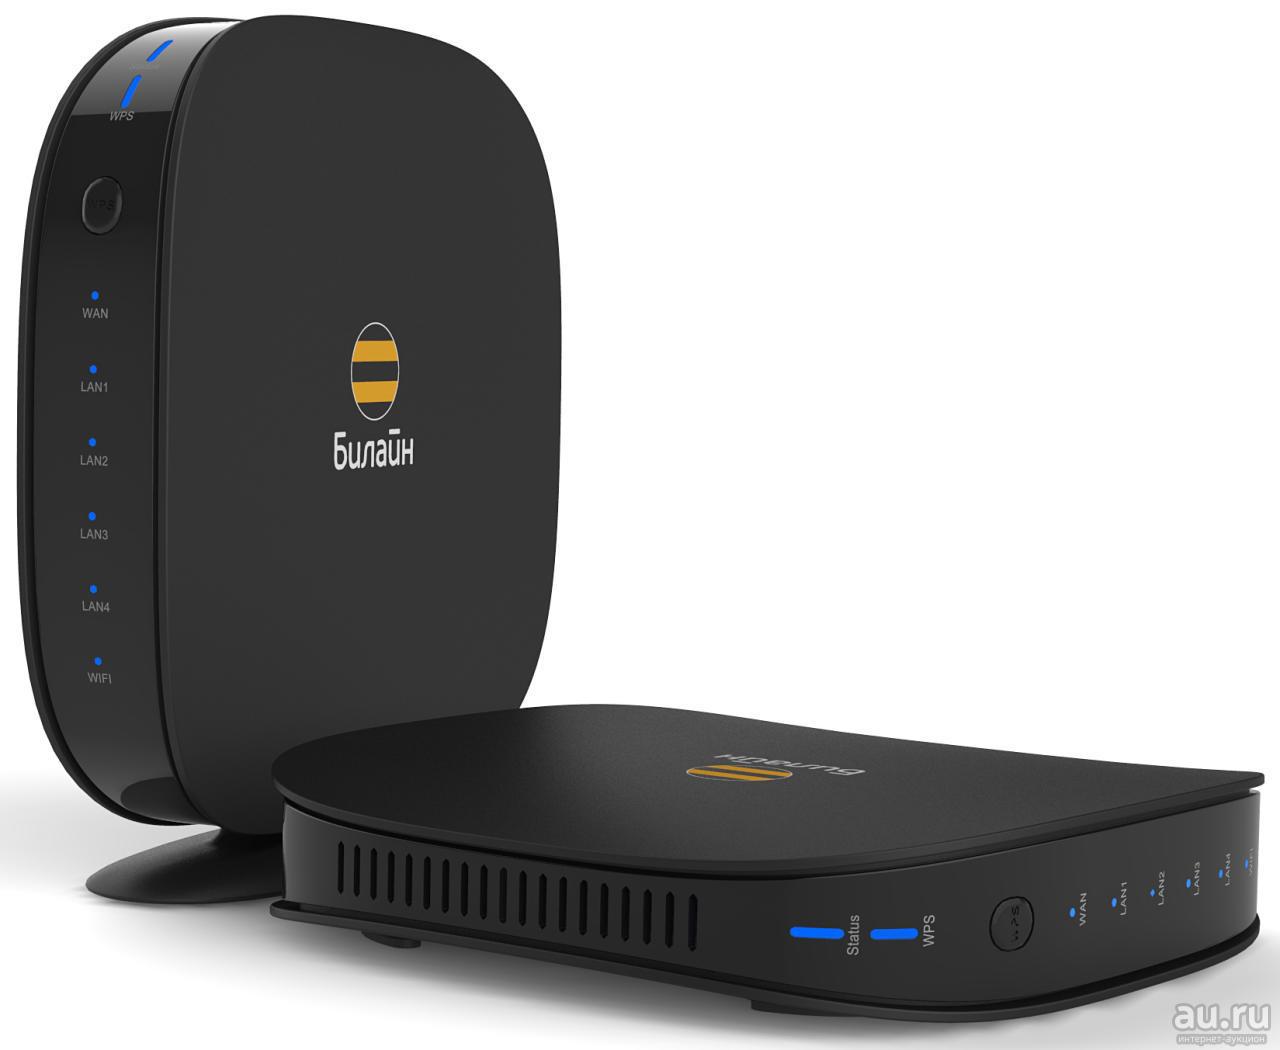 Купить роутер для интернета билайн. Wi-Fi роутер Билайн Smart Box. Wi Fi роутер Beeline Smart Box. Роутер Билайн 4g. Роутер Билайн 4g беспроводной.